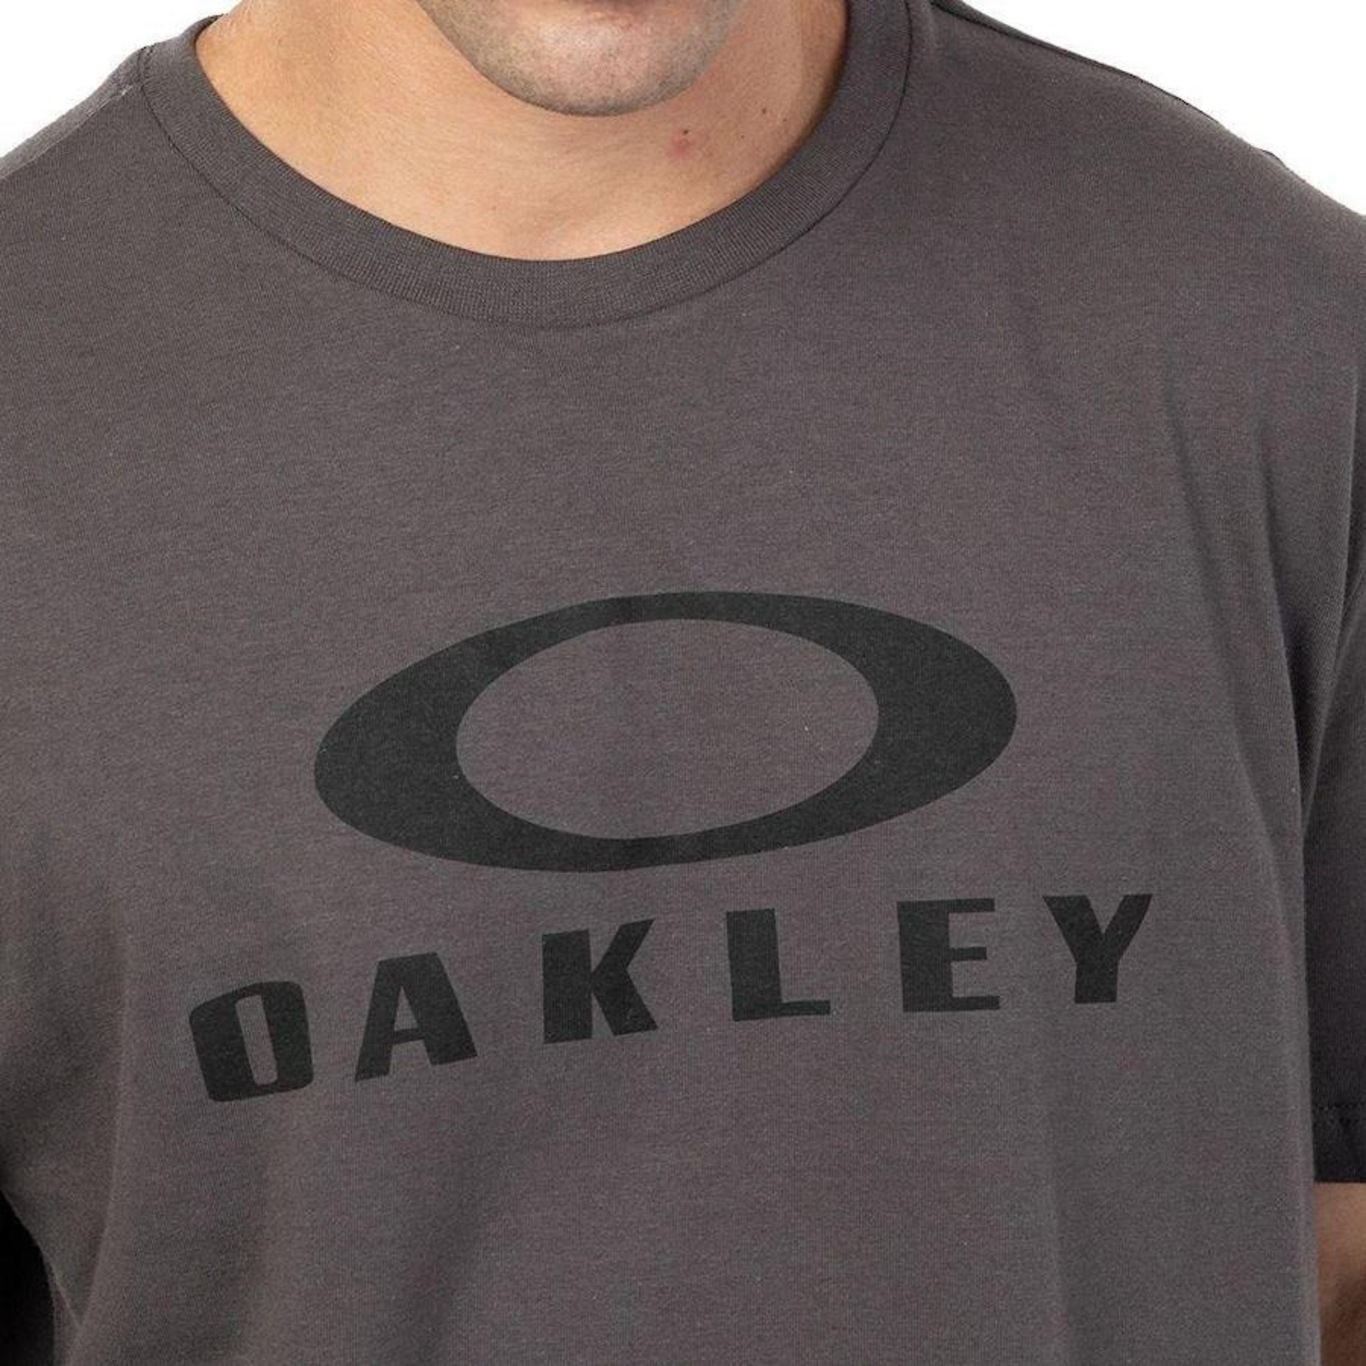 Camiseta Oakley O-Bark SS Rhone